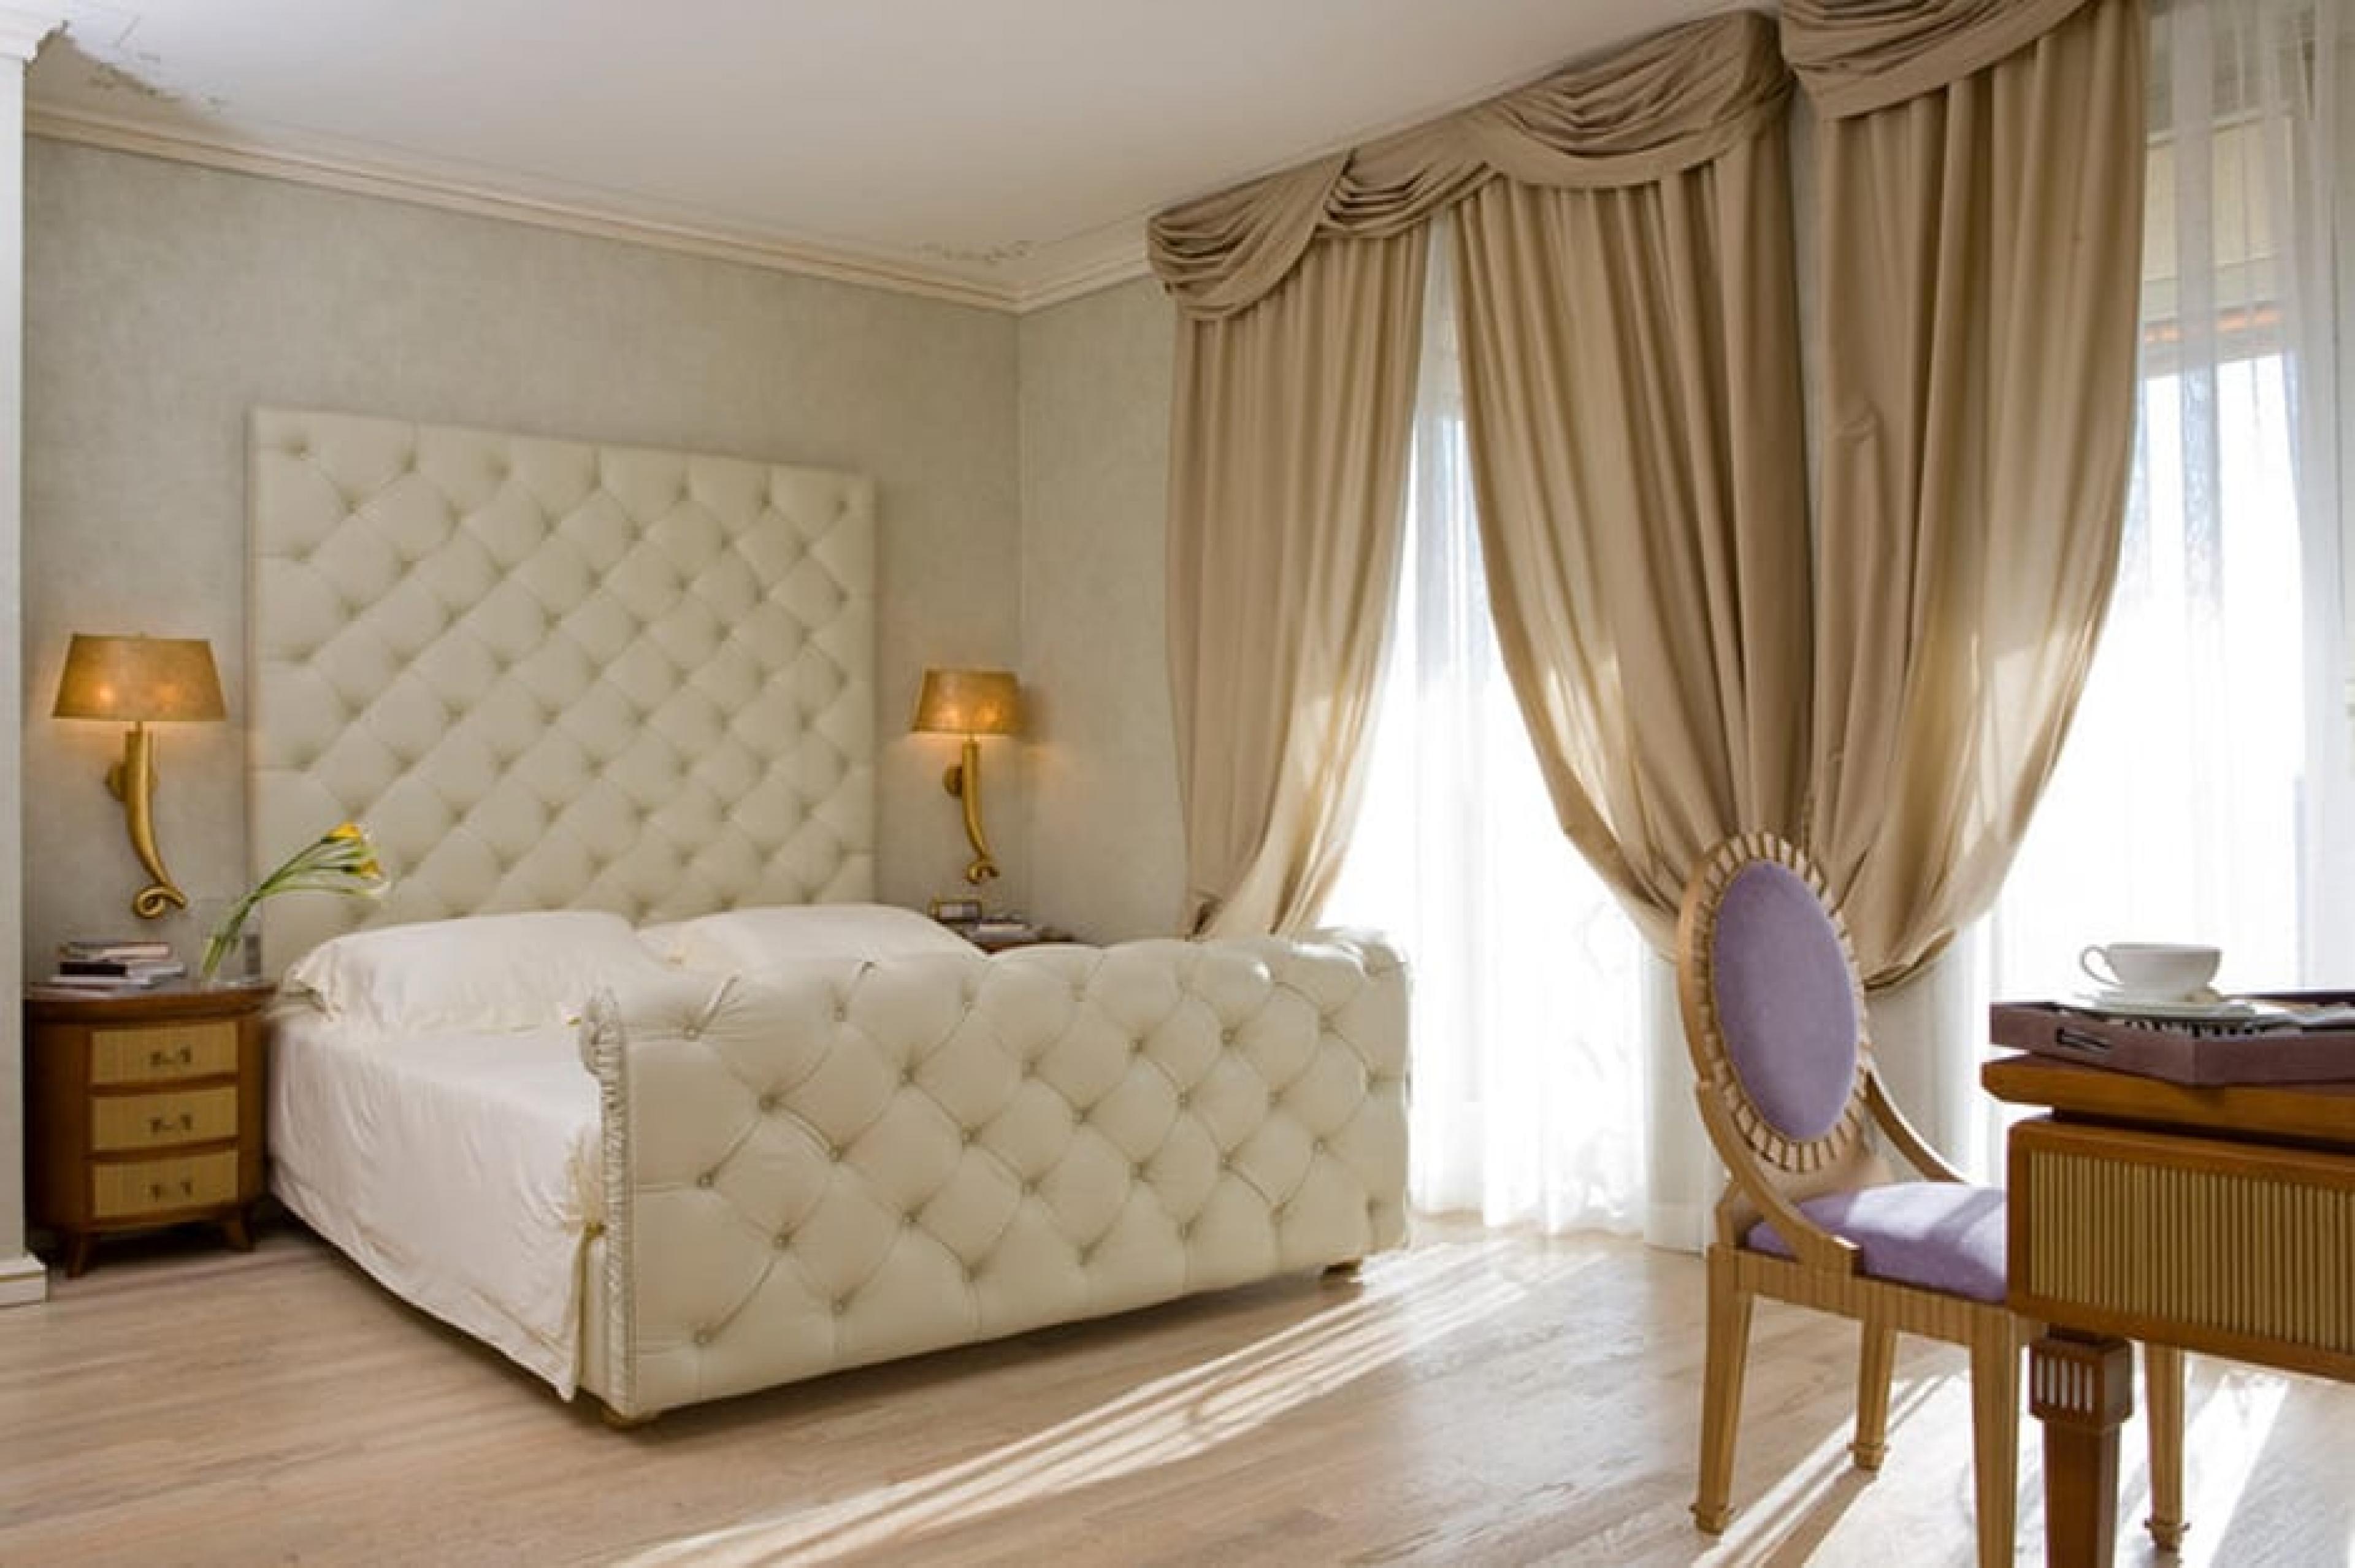 Suite at Grand Hotel Imperiale, Marmi, Italy